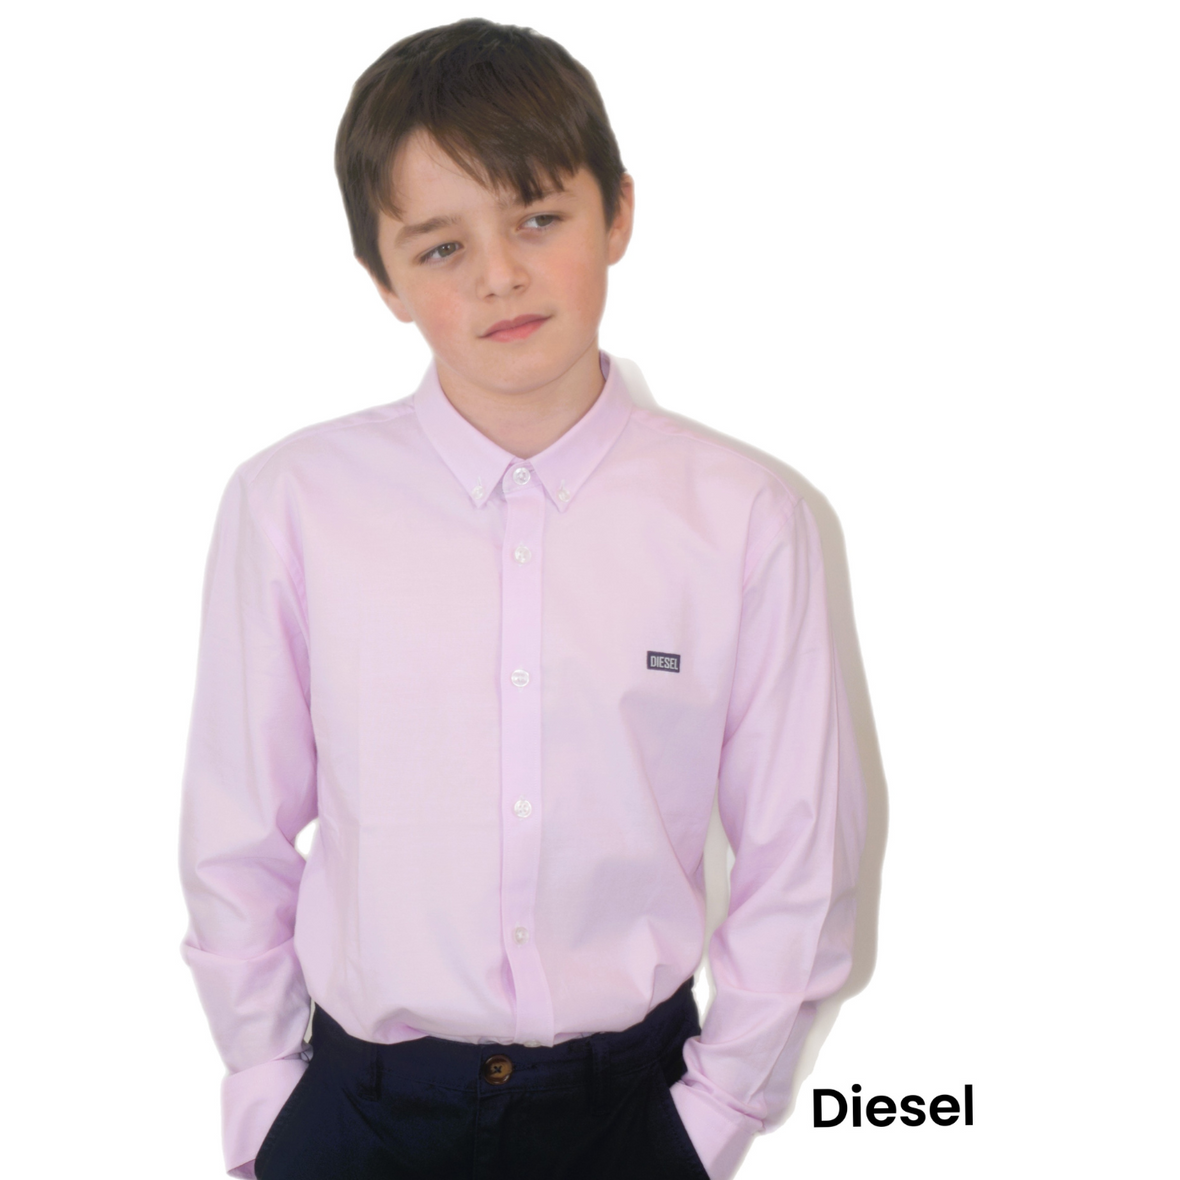 Diesel Boys Oxford Shirt 